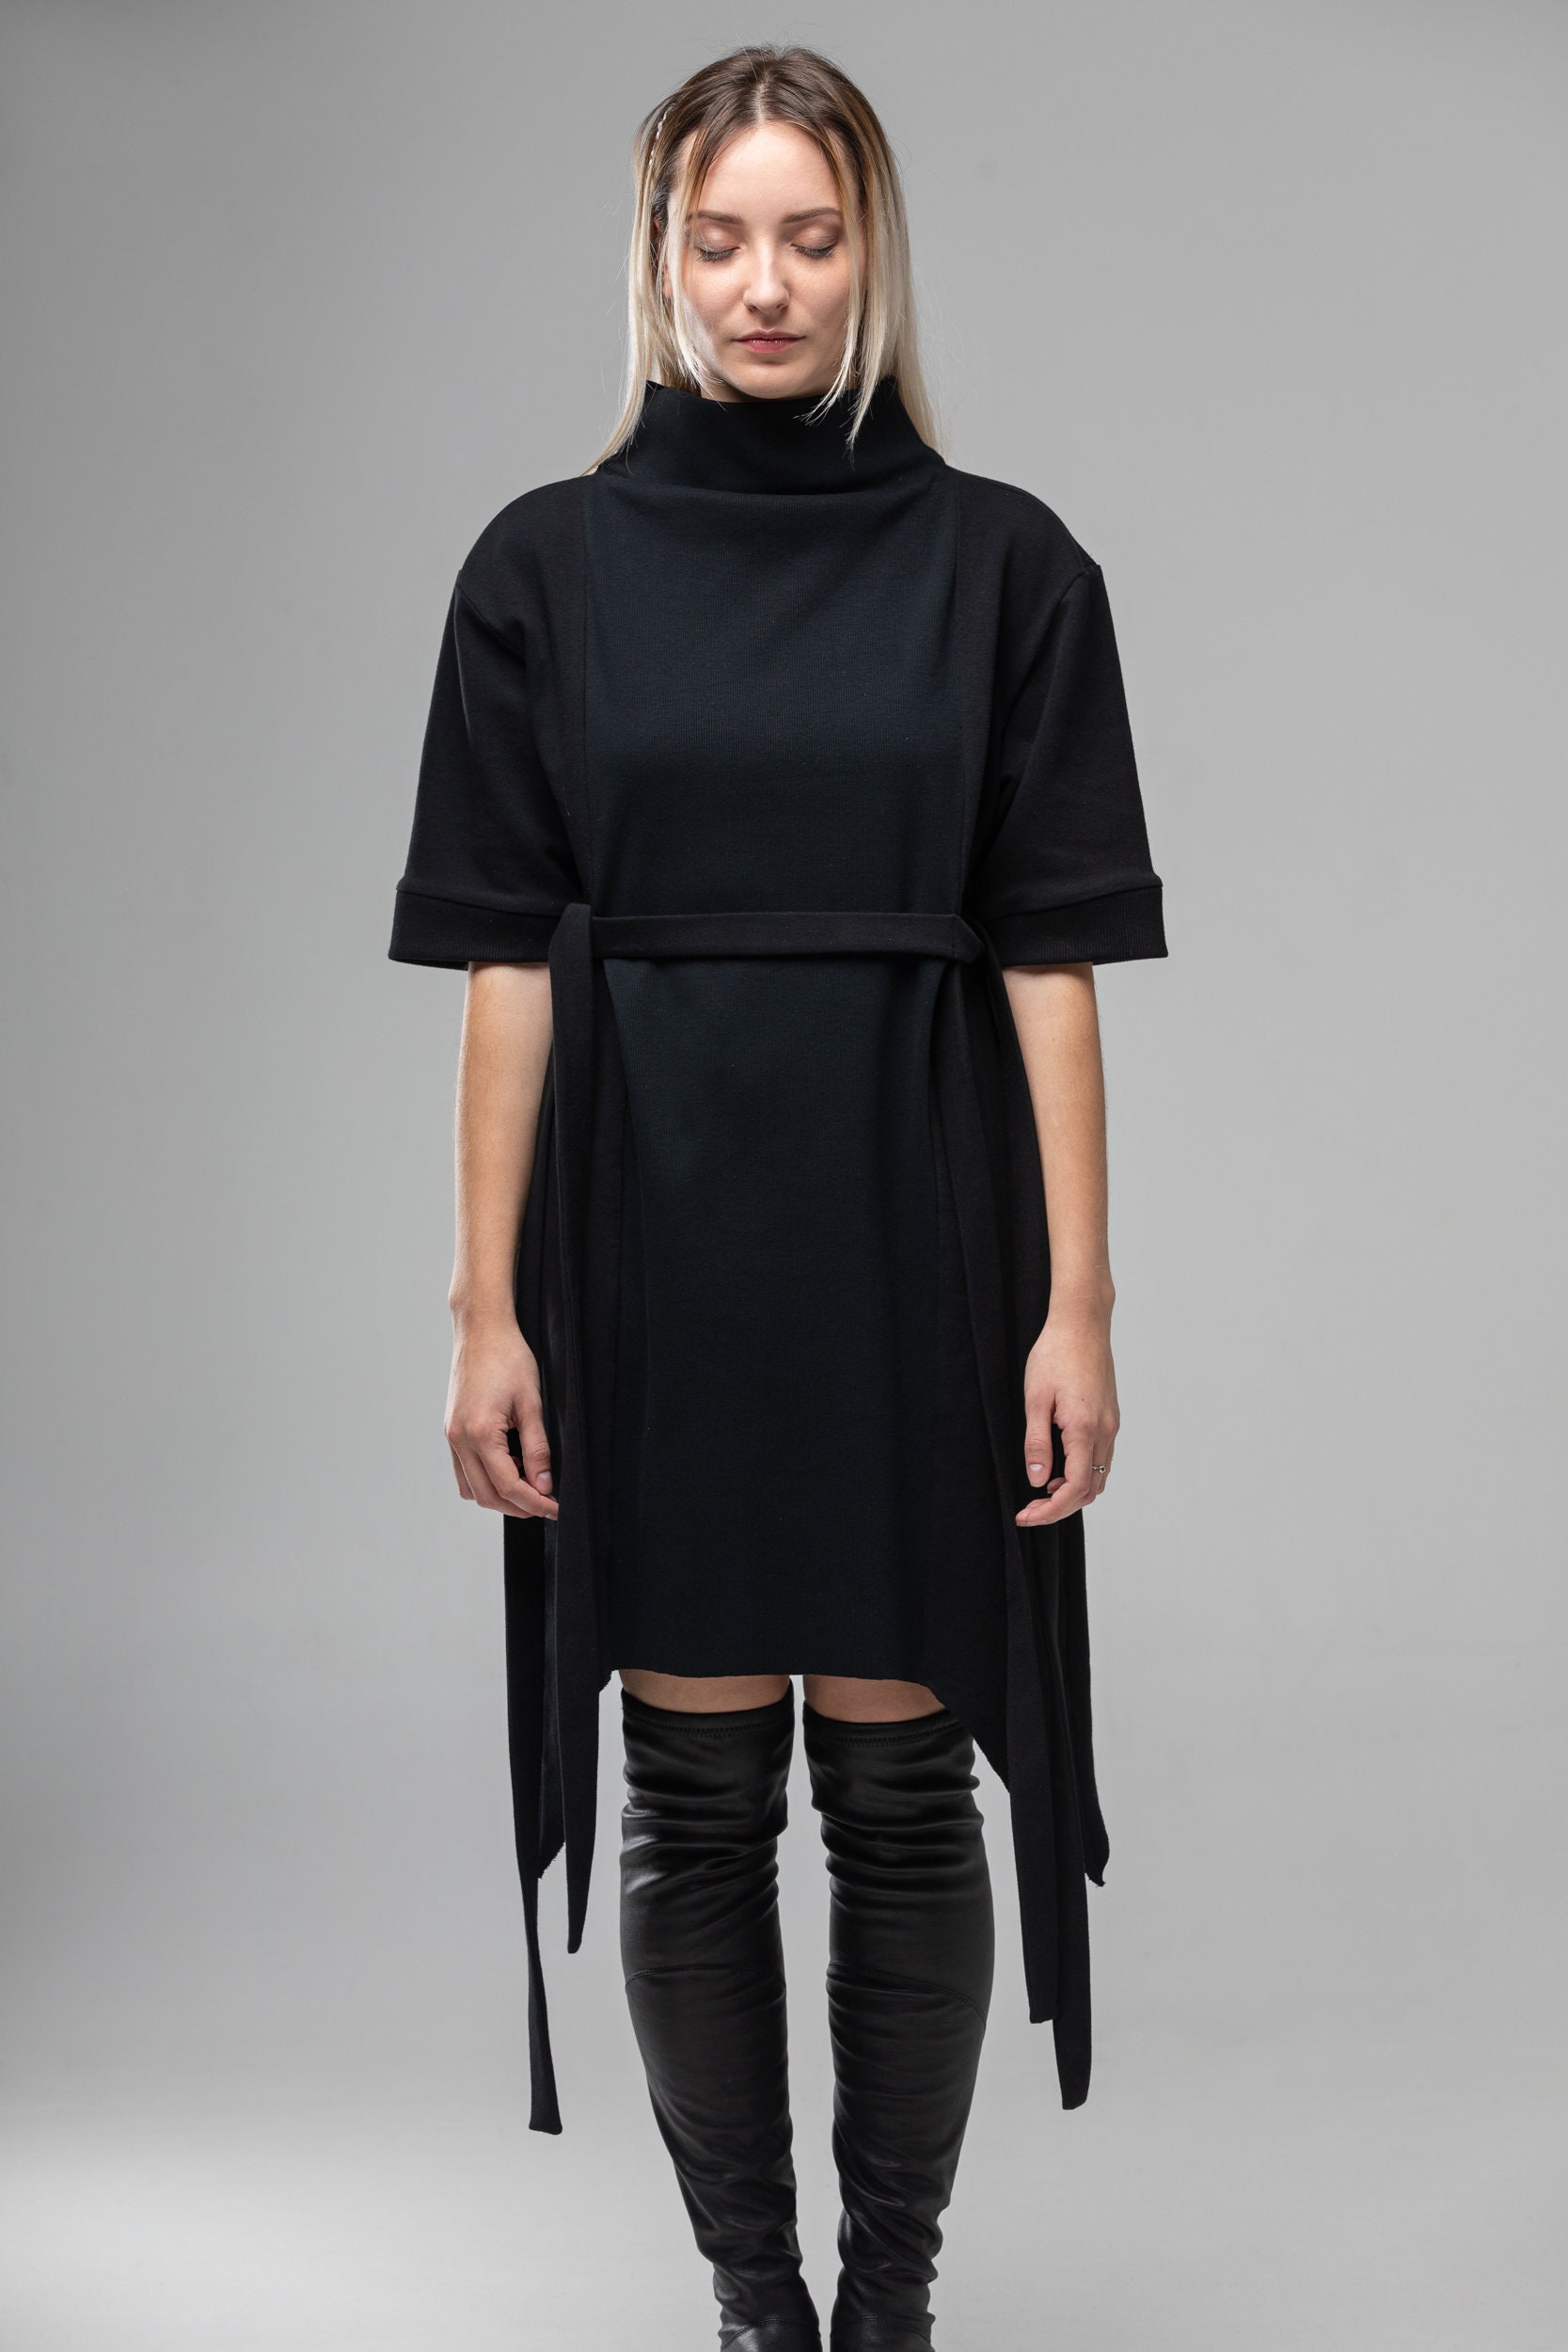 Gothic black cyberpunk t shirt dress women turtleneck tunic | Etsy